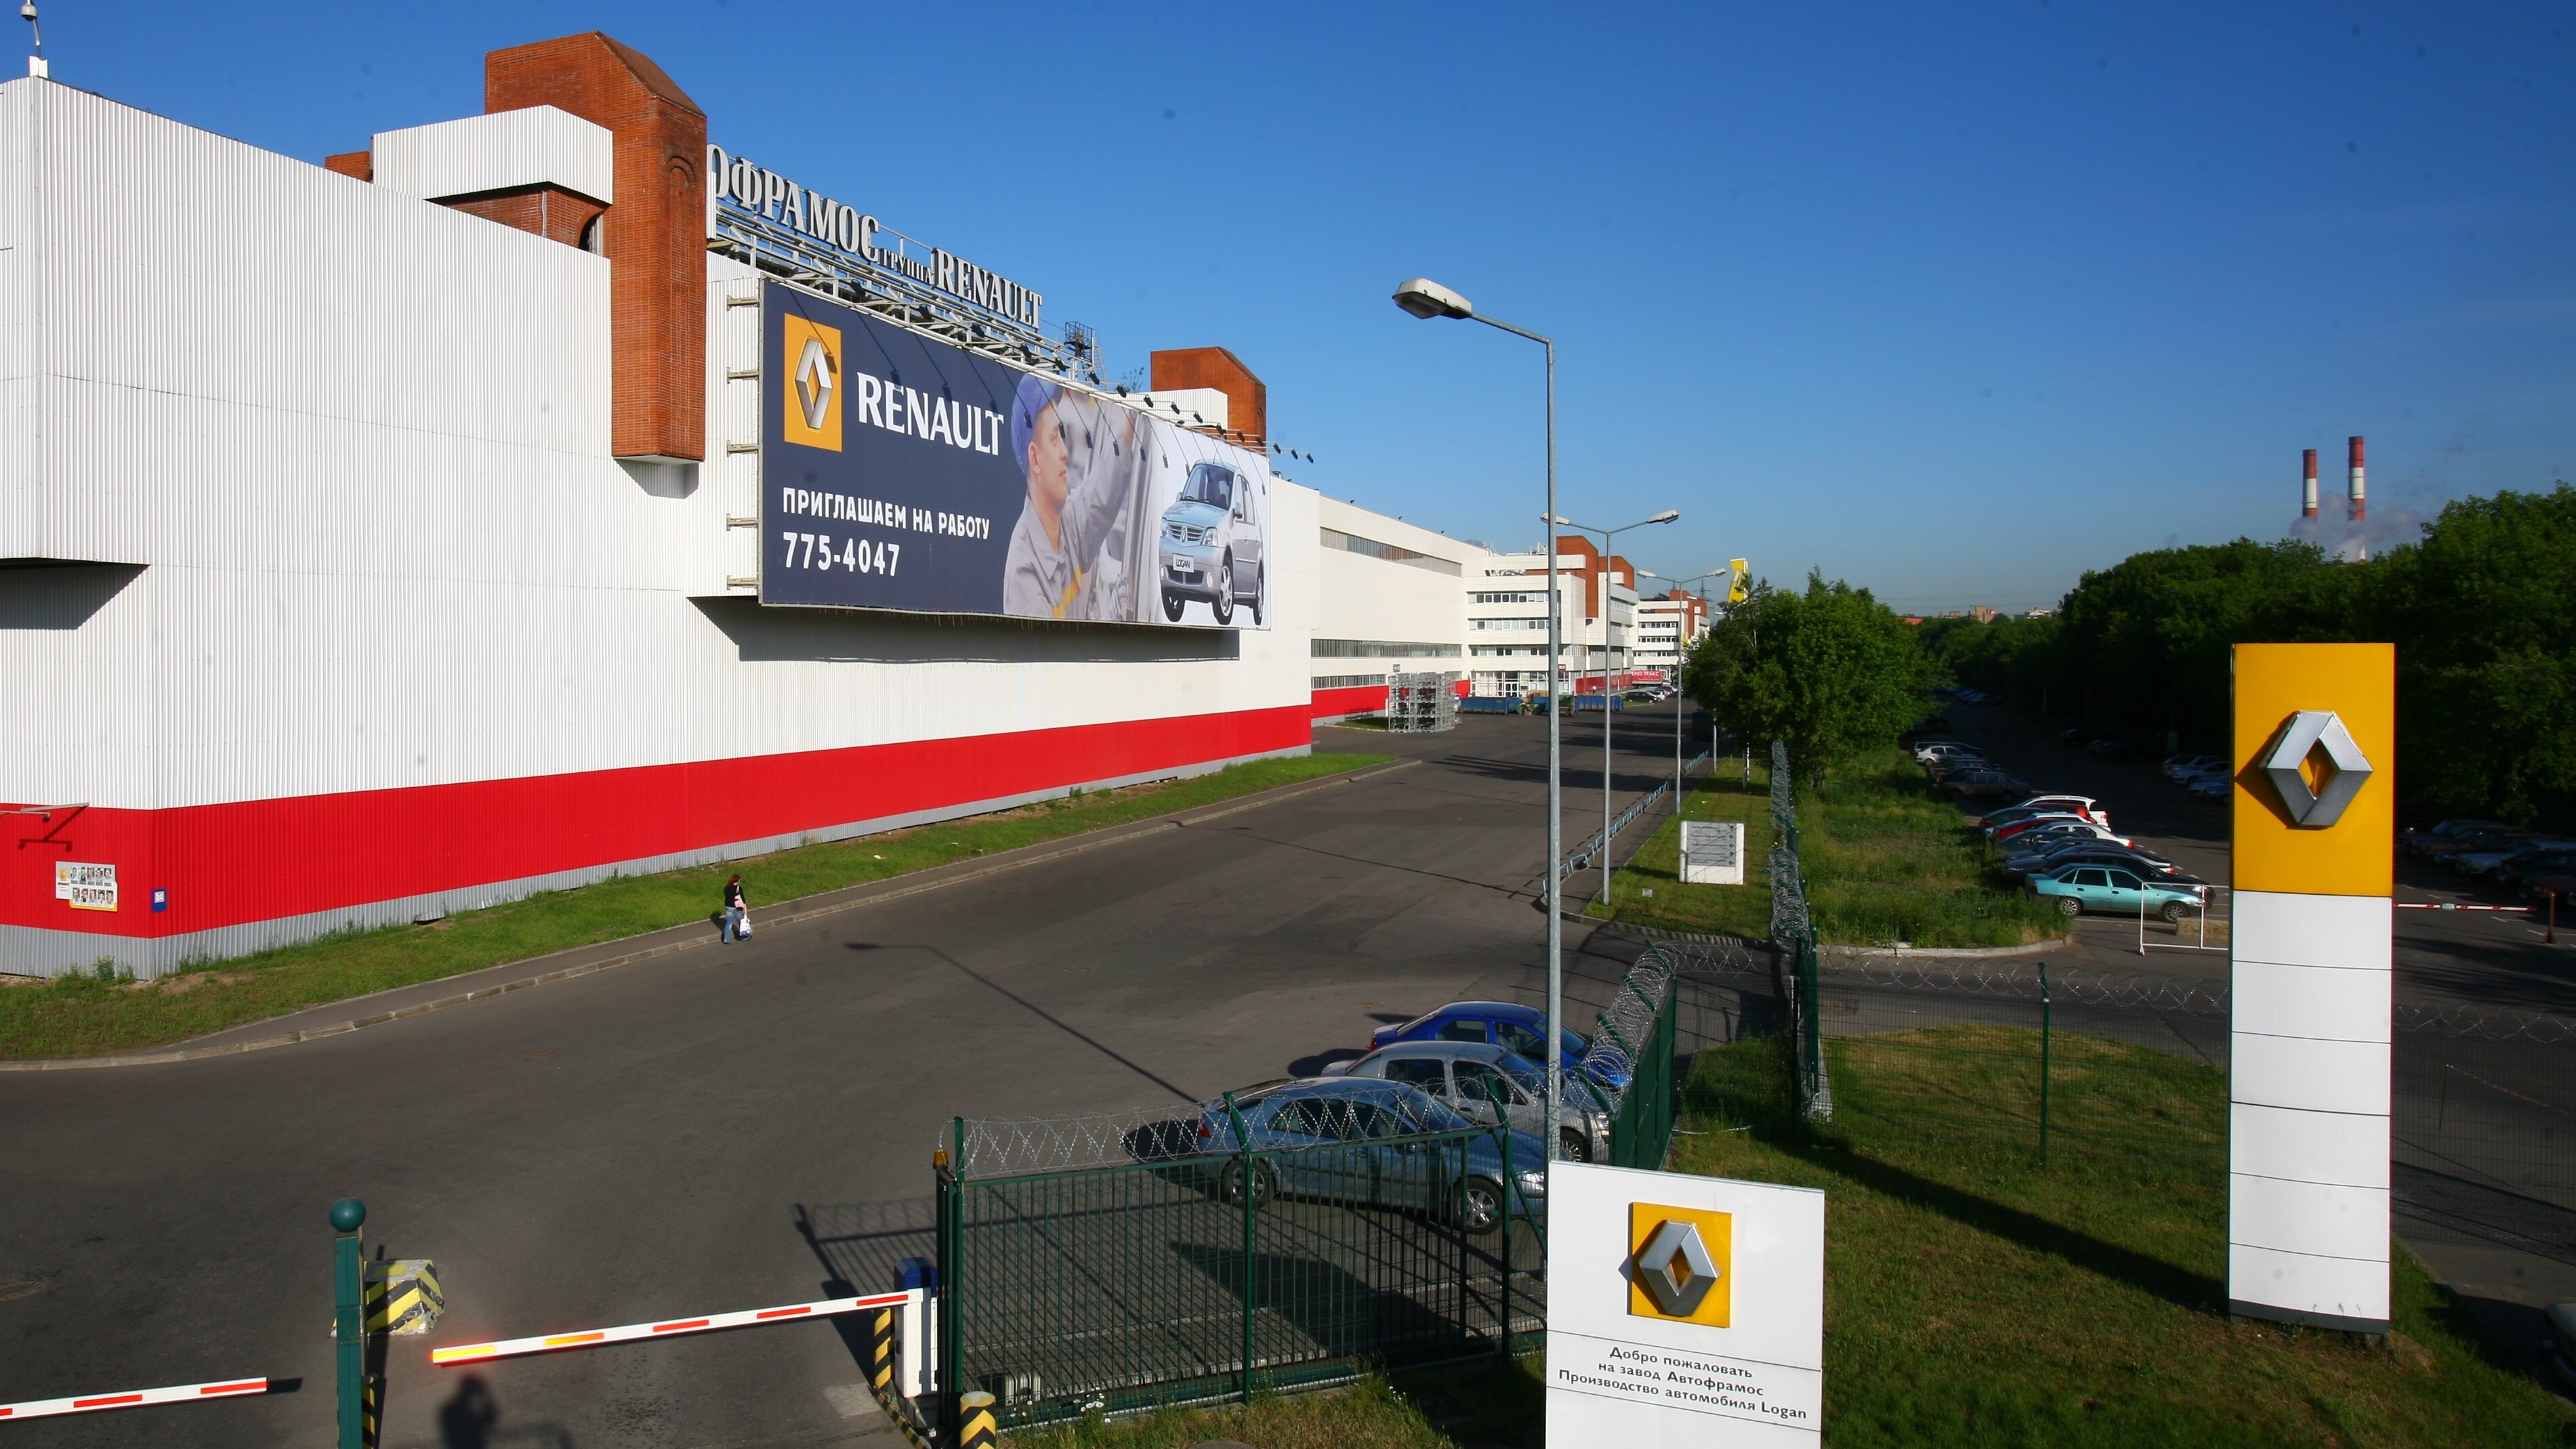 Renault Russia Moscow Avtoframos Plant